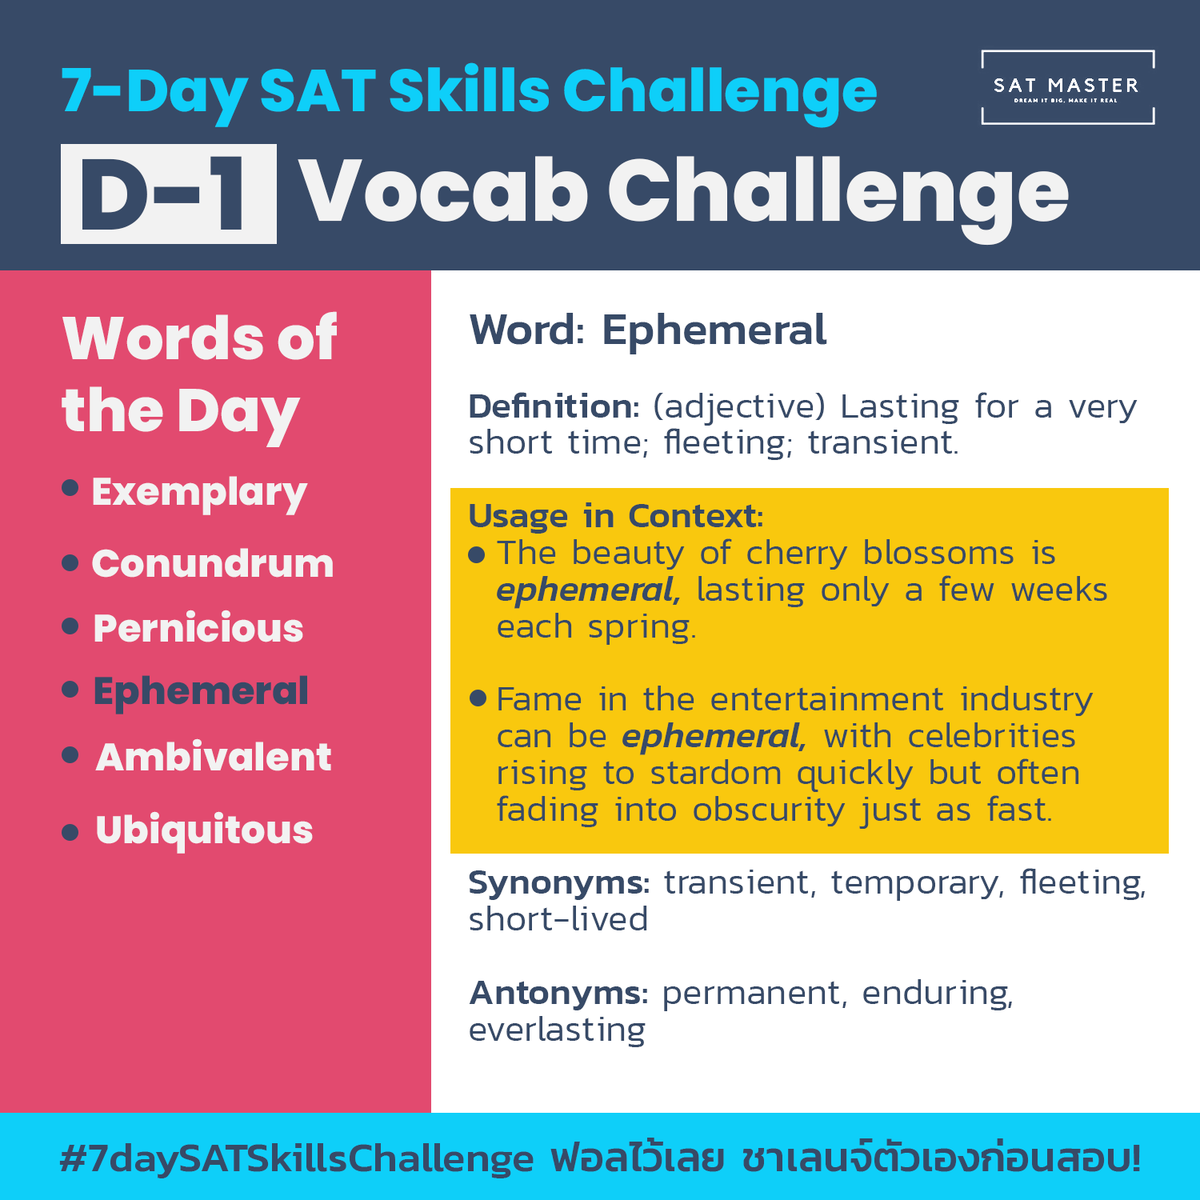 🔥#7Day_SAT_Skill_Challenge #Day1 1/2🎯
เริ่มวันแรกด้วย Vocab Challenge ง่่ายๆ(มั้ง)
ป่ะ! ลุย!!!
.
ใกล้สอบเข้าไปทุกทึ วันนี้พี่ๆมาชวนทำโจทย์ไปด้วยกัน
โค้งสุดท้ายแล้ว มี SAT Master ติวเป็นเพื่อนน๊า ❤
👍กดติดตามช่องเราไว้ แล้วมาอัปเดต 4 โมงเย็นทุกวัน
.
Line@ : @SatMaster